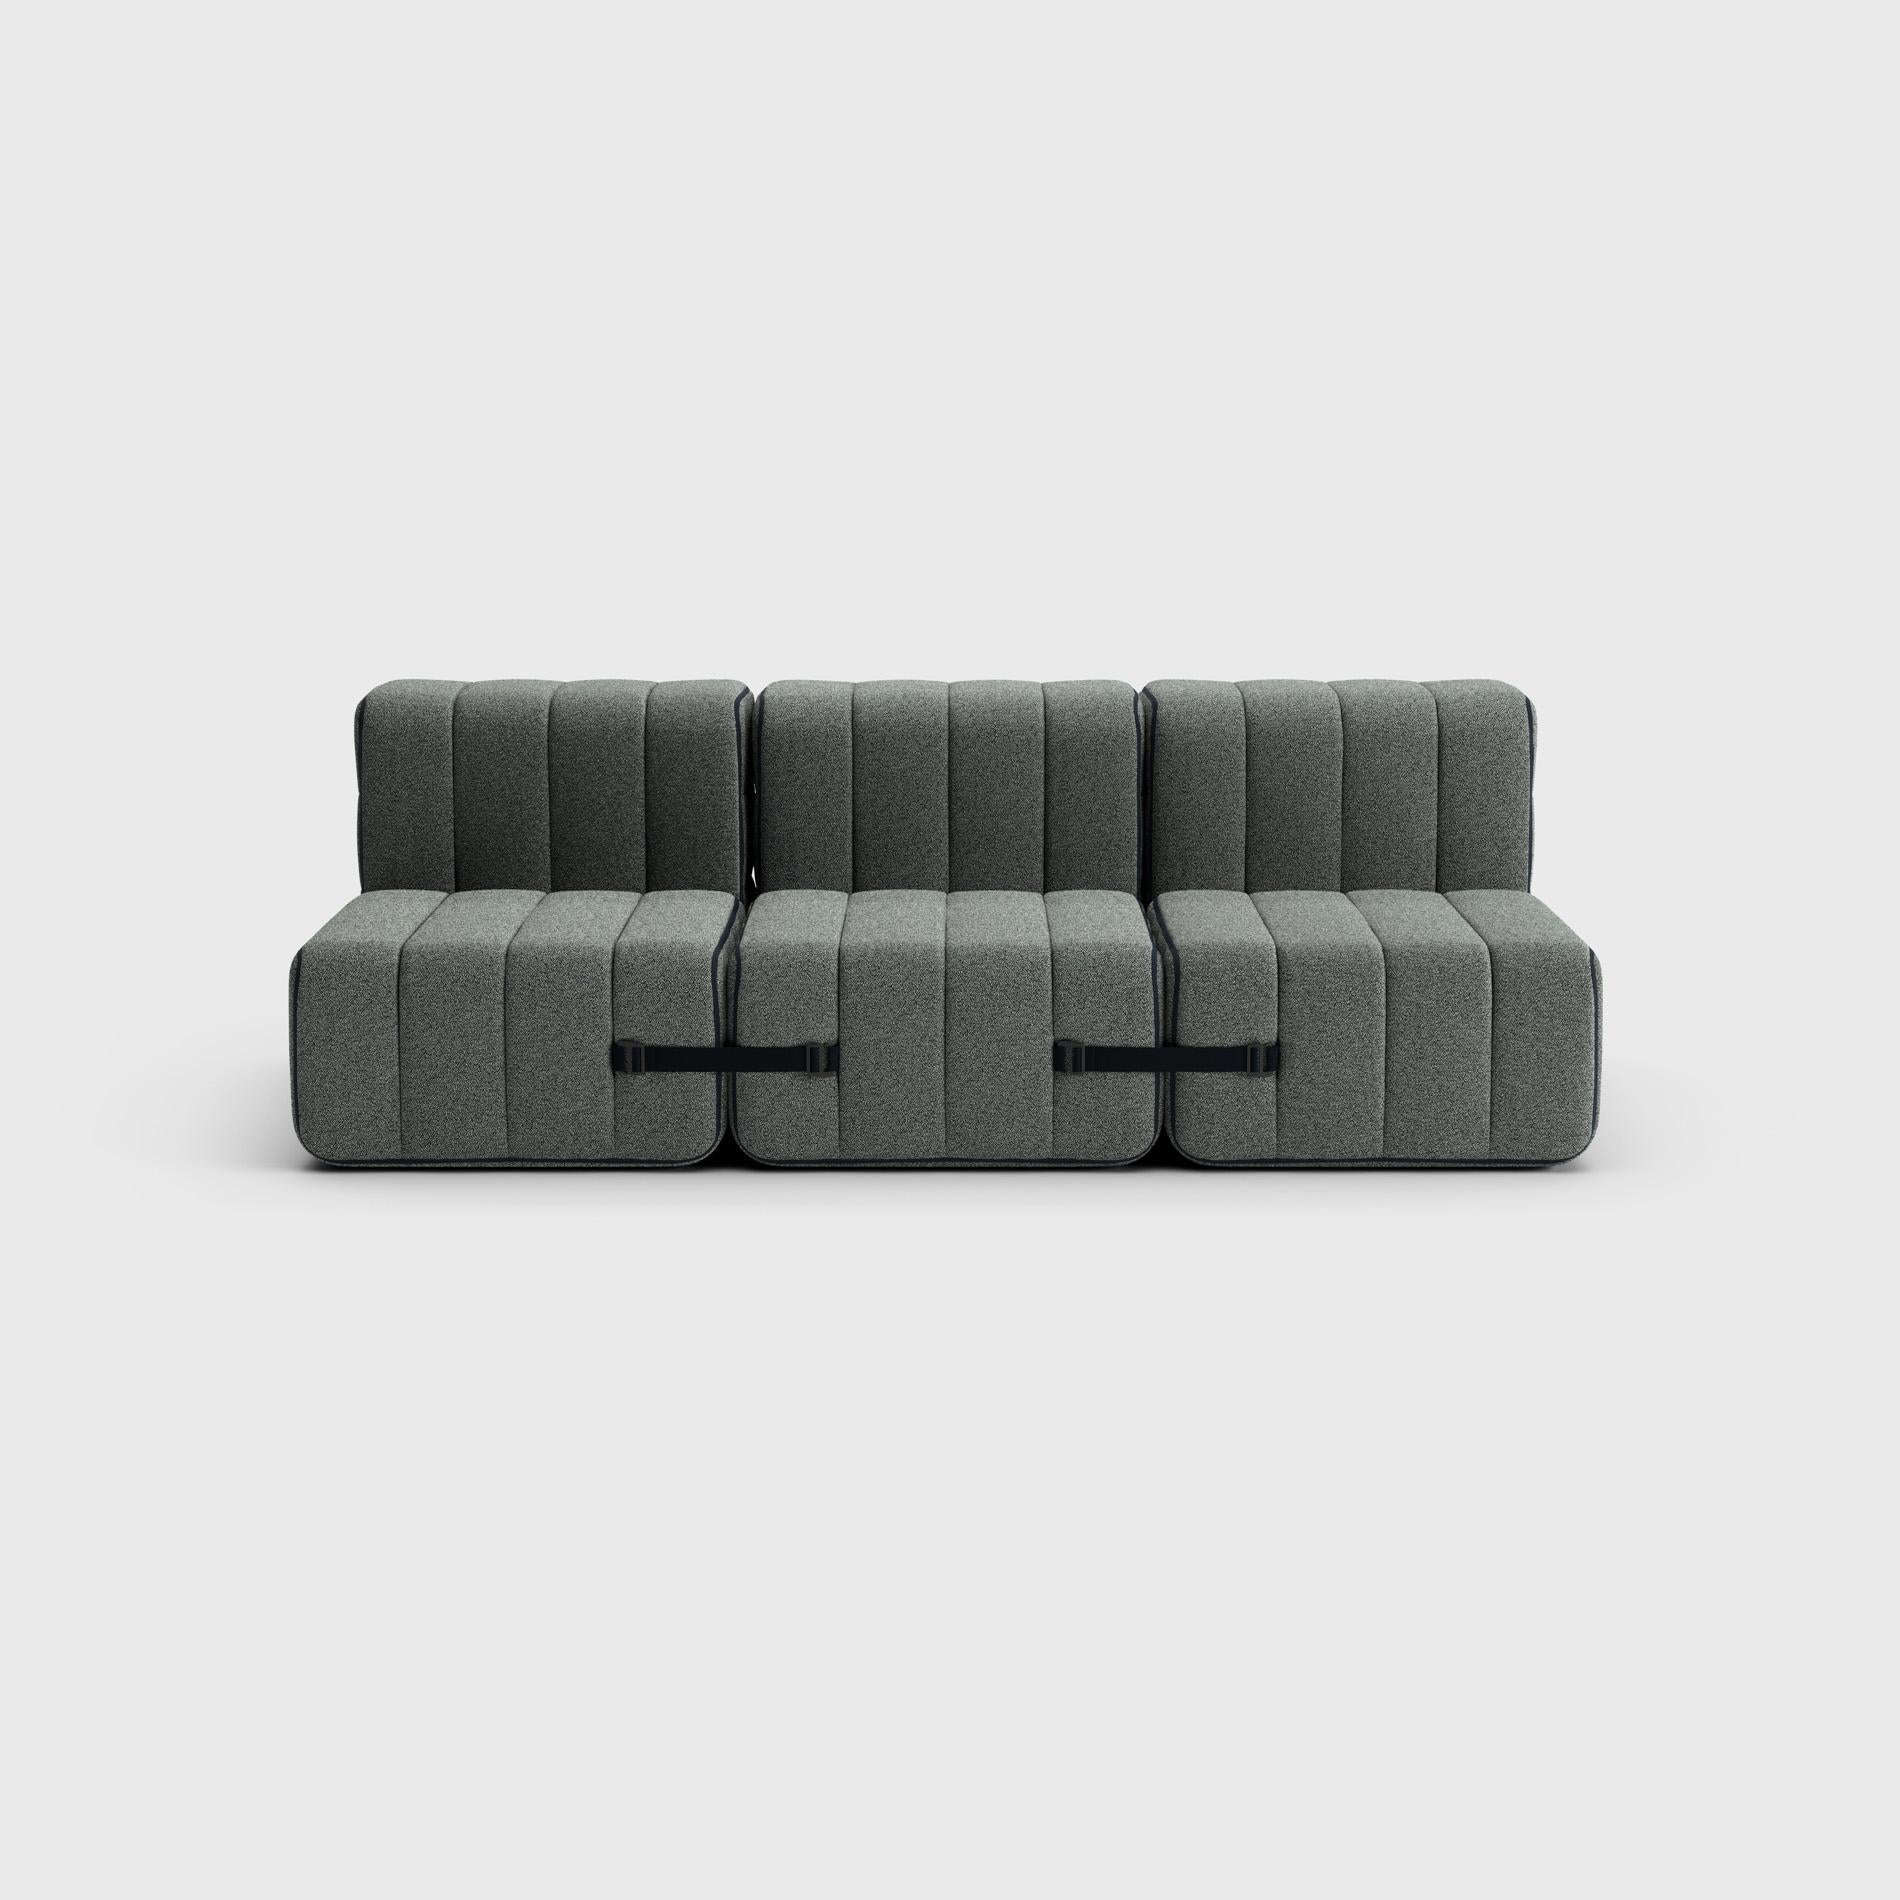 Modern Curt Single Module, Fabric Sera 'Gravel Grey', Curt Modular Sofa System For Sale